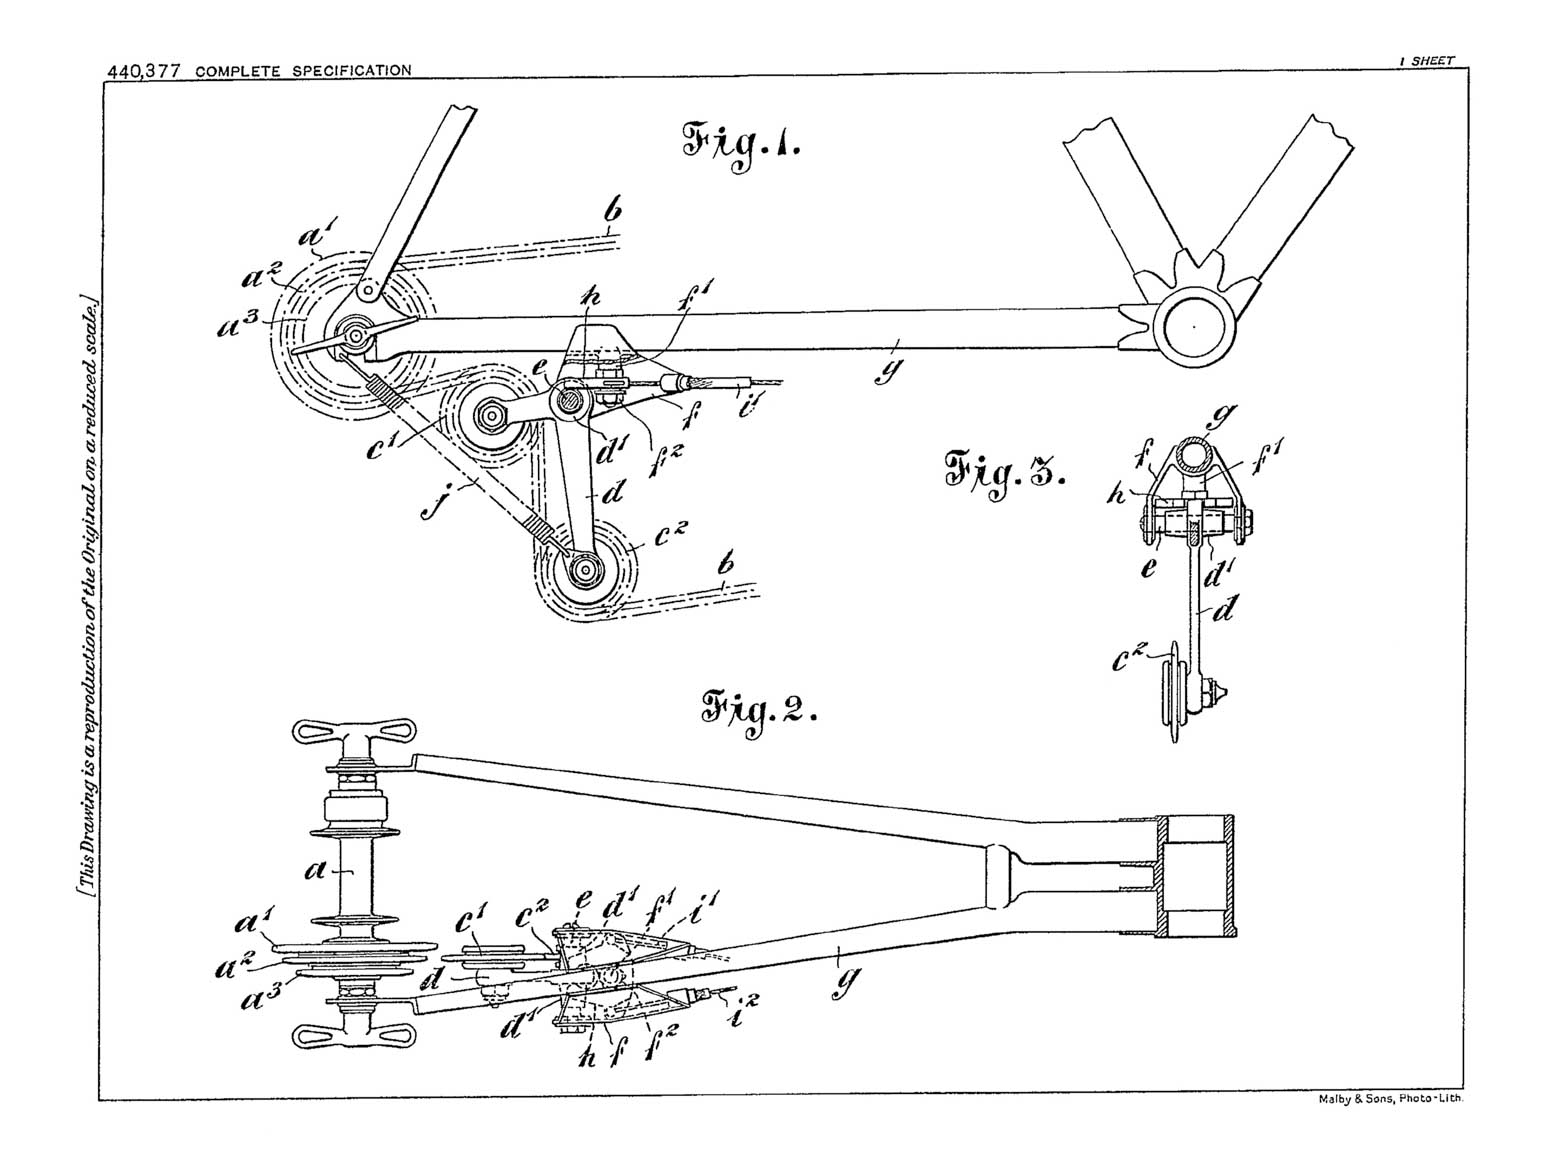 UK Patent 440,377 - Enfield scan 3 main image